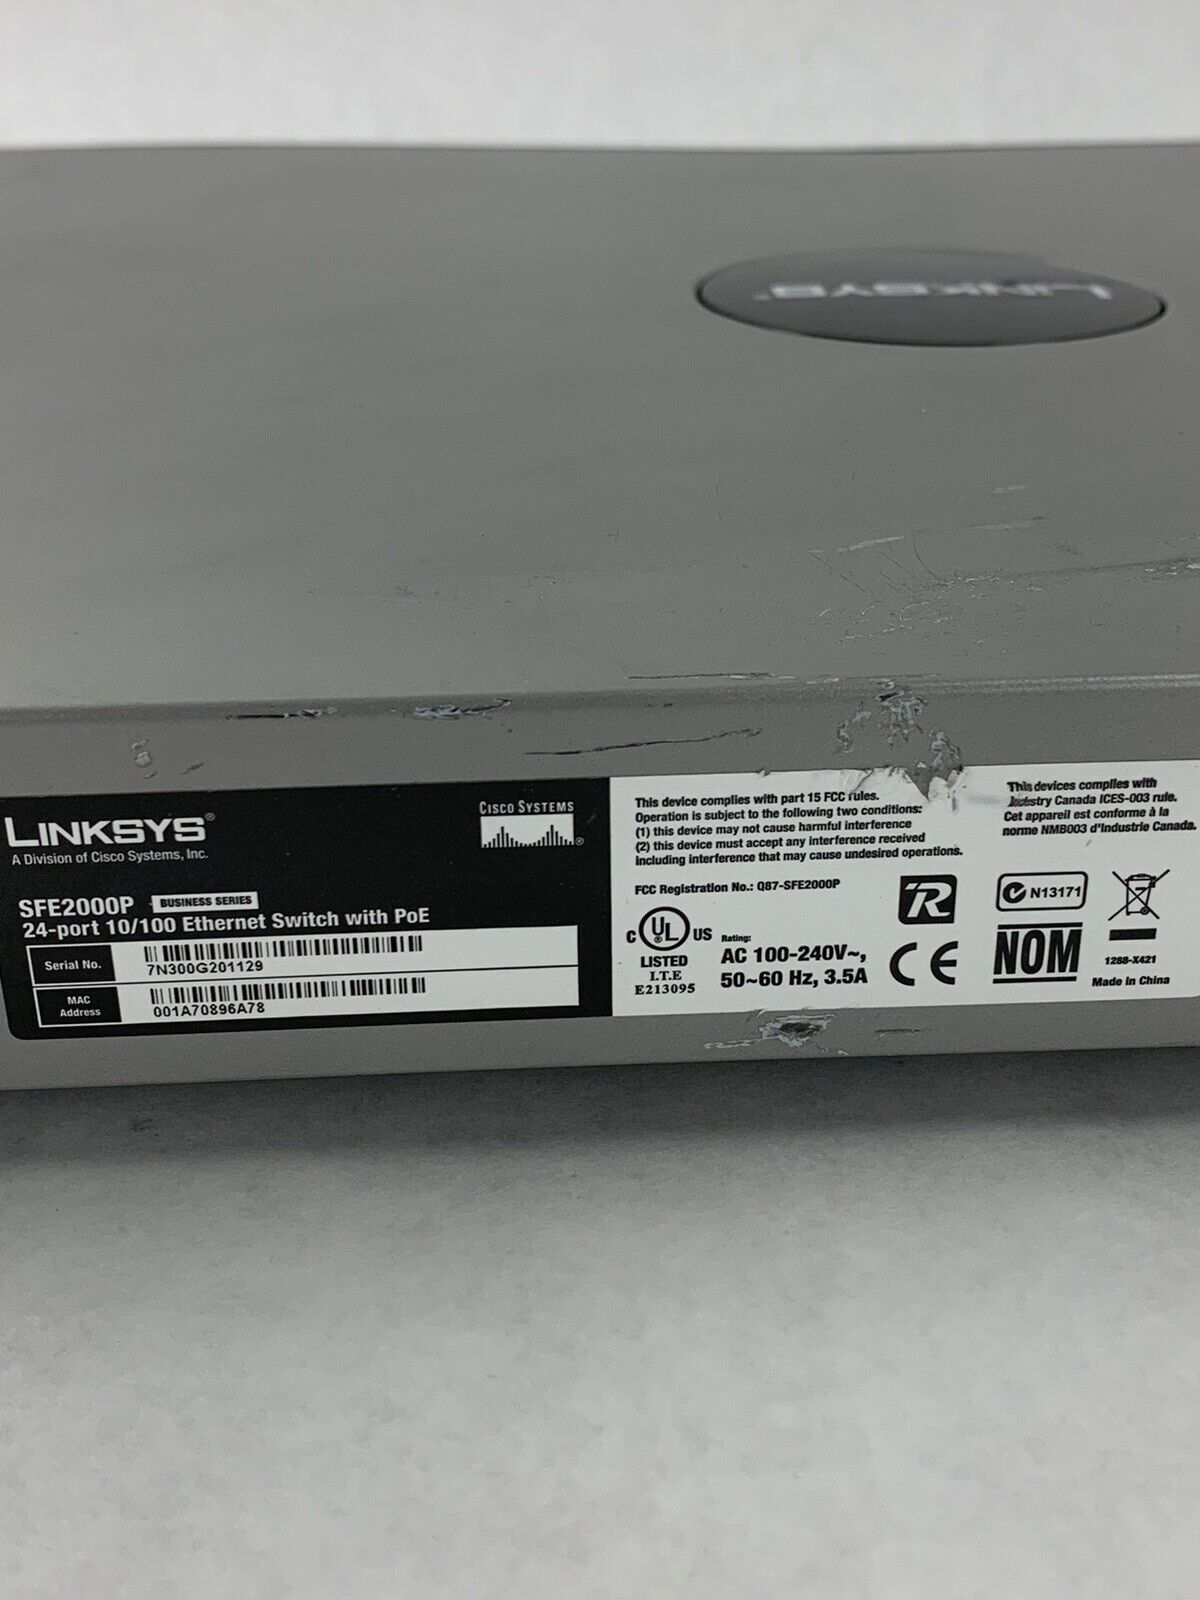 Linksys SFE2000P 24 Port 10/100 Ethernet PoE Managed Switch